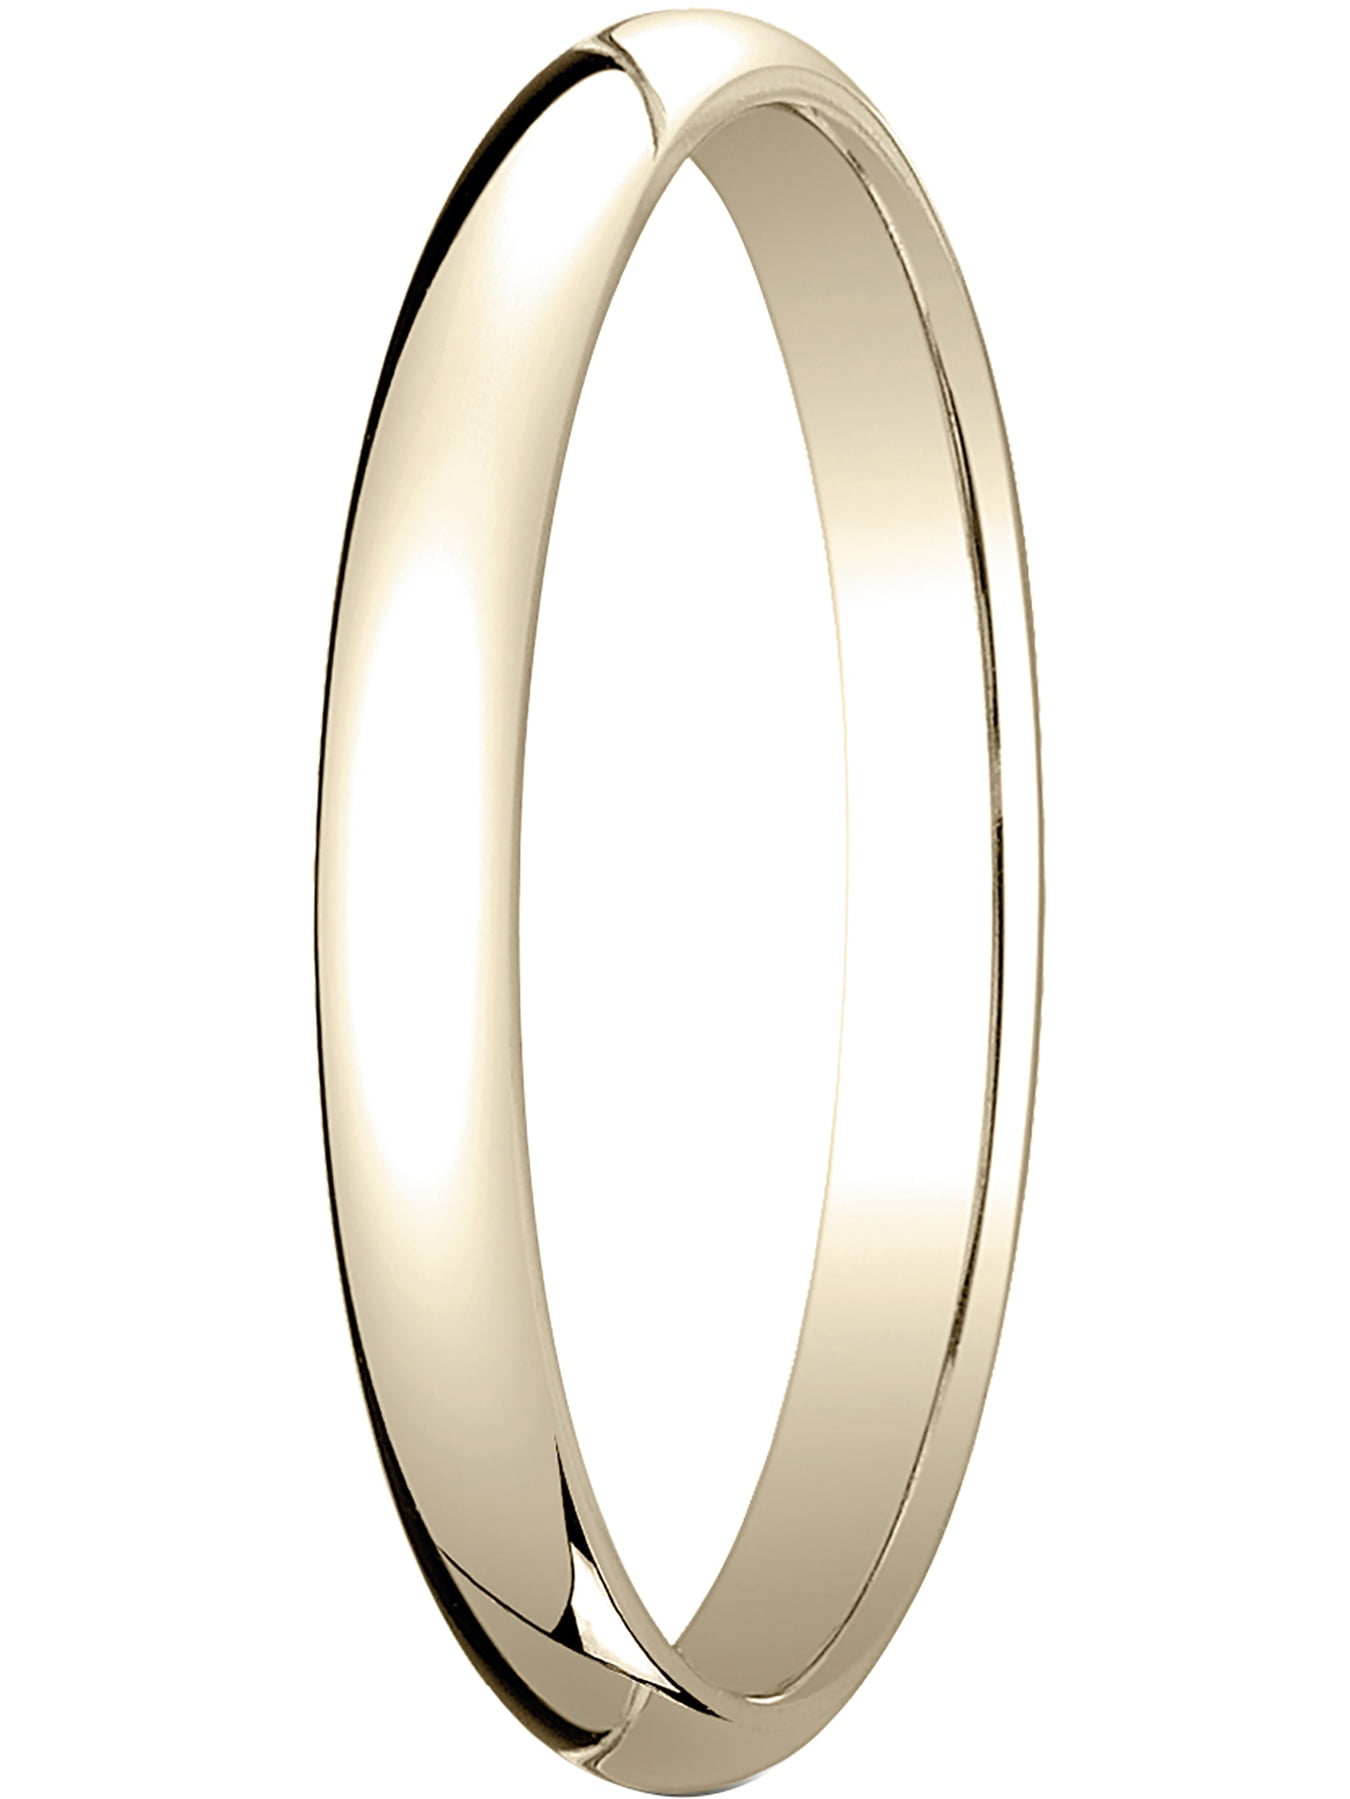 Gembrooke Creations Women's Titanium 8mm Polished Dome Plain Wedding Band Ring